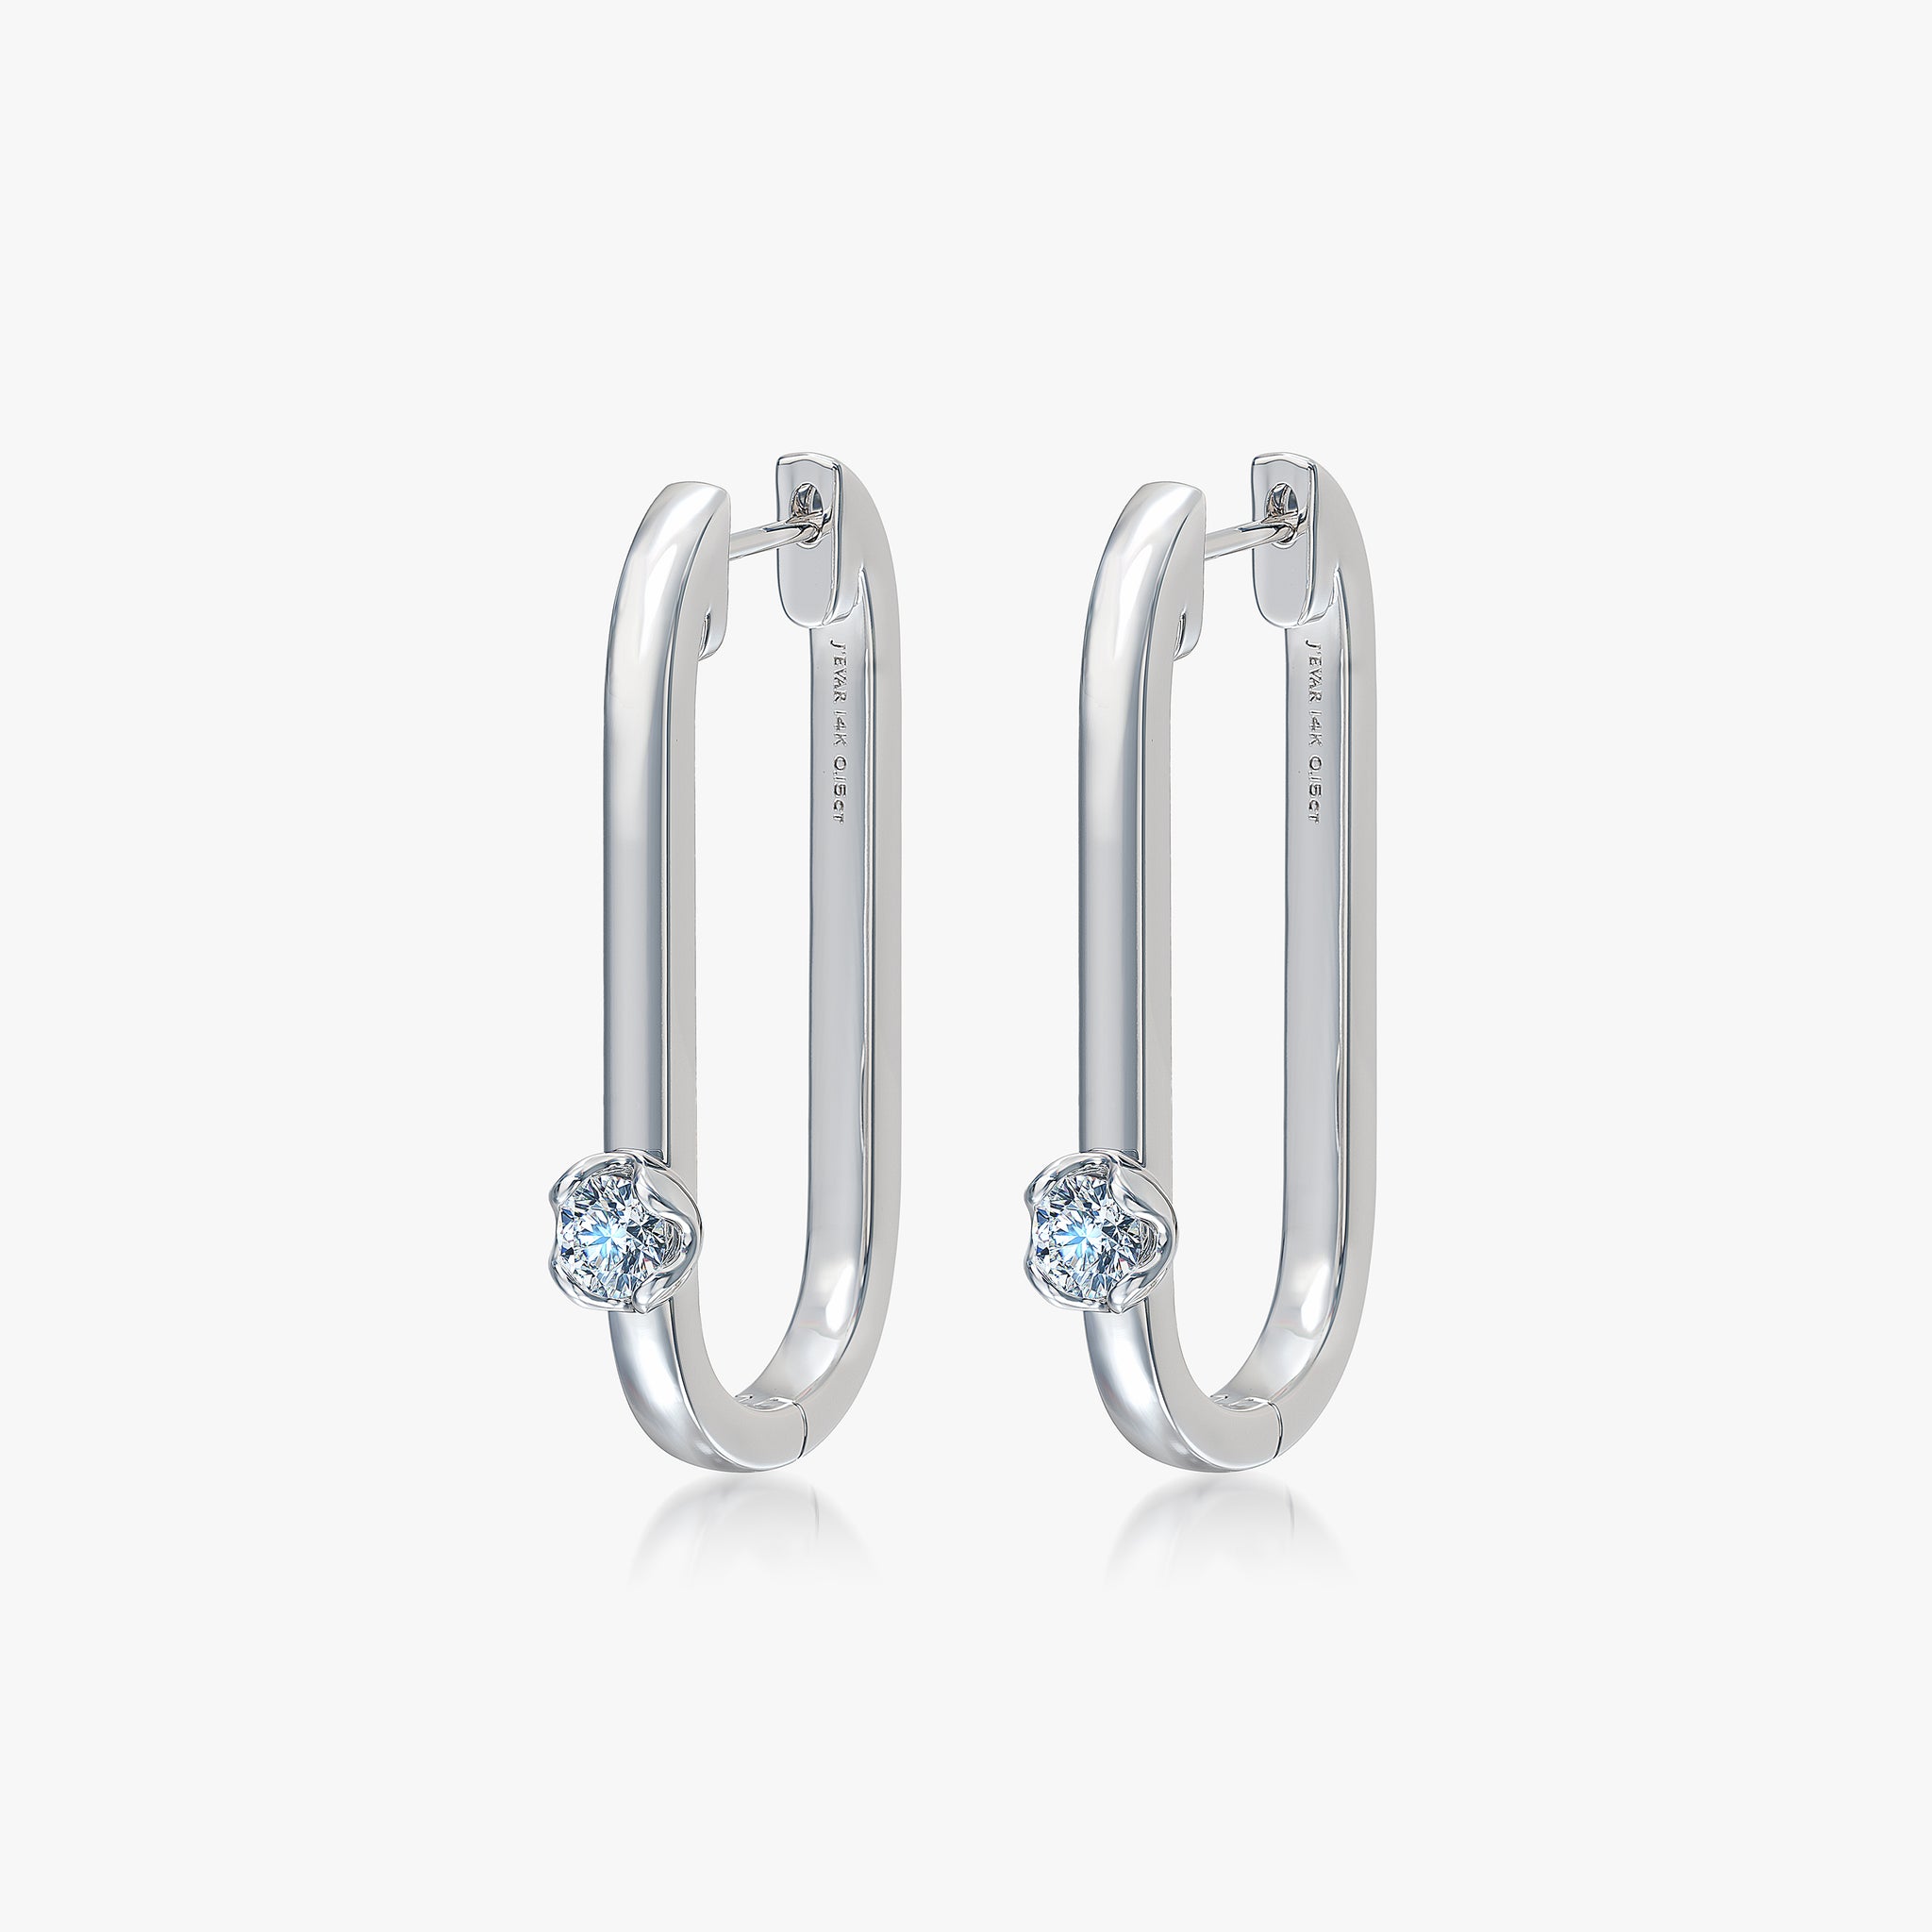 J'EVAR 14KT White Gold U-shaped Hoop ALTR Lab Grown Diamond Earrings Perspective View